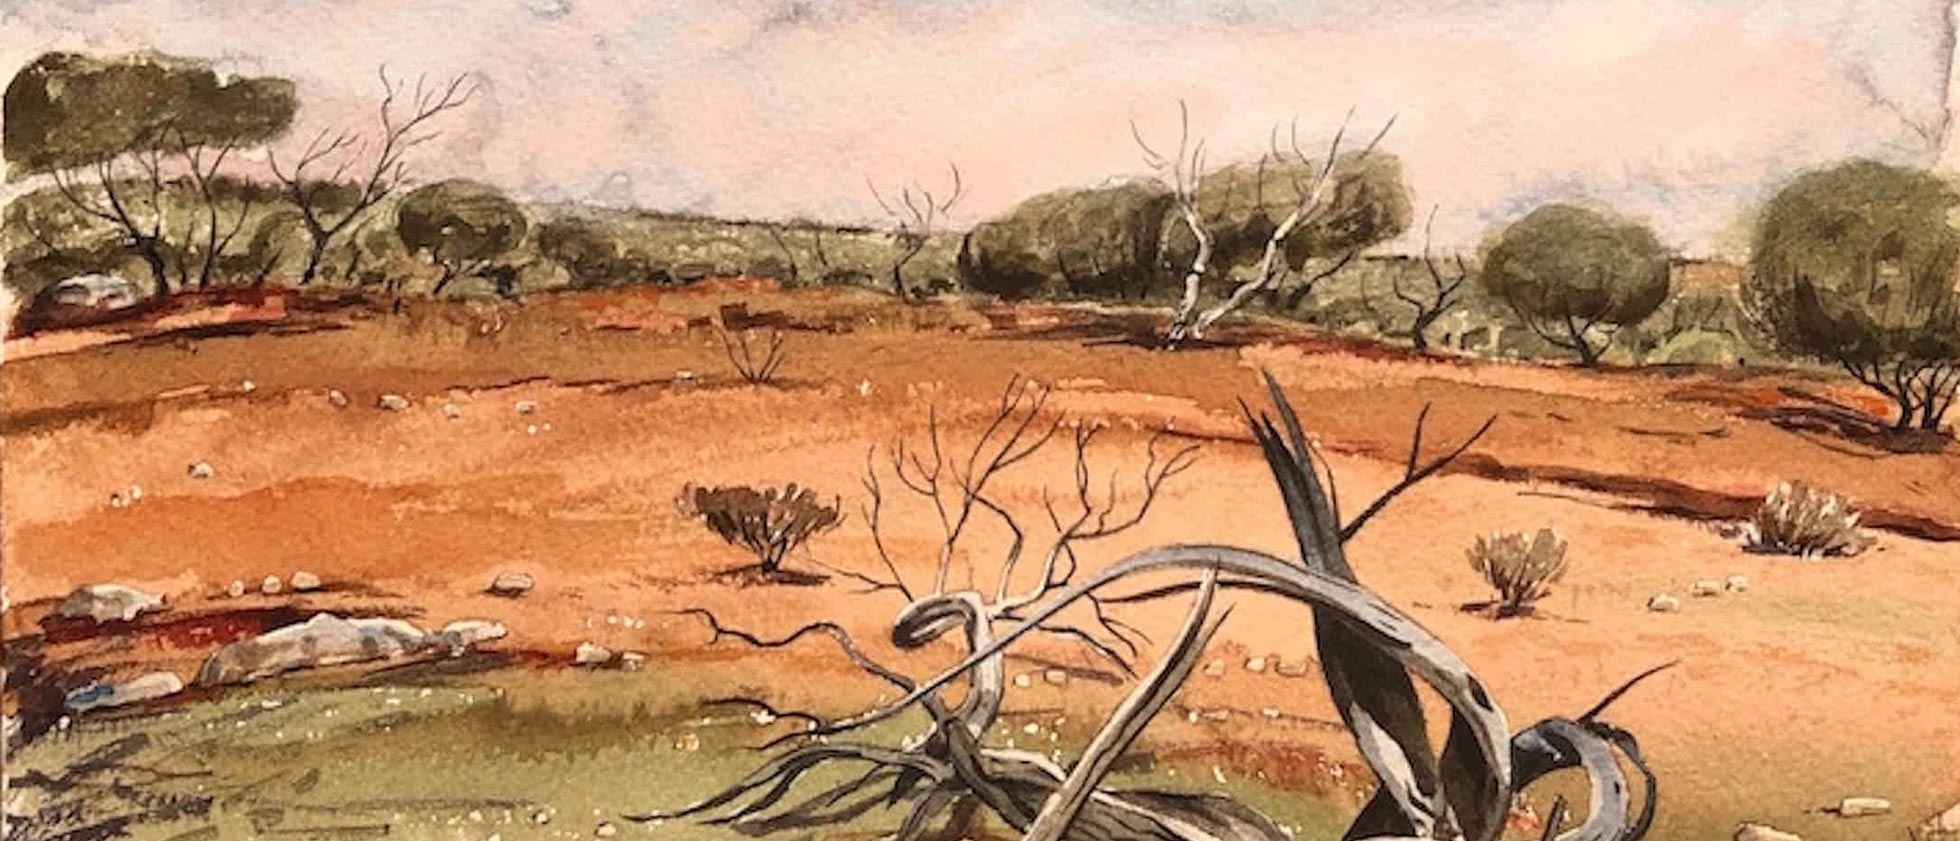 Painting of Australian sand and Bush landscape